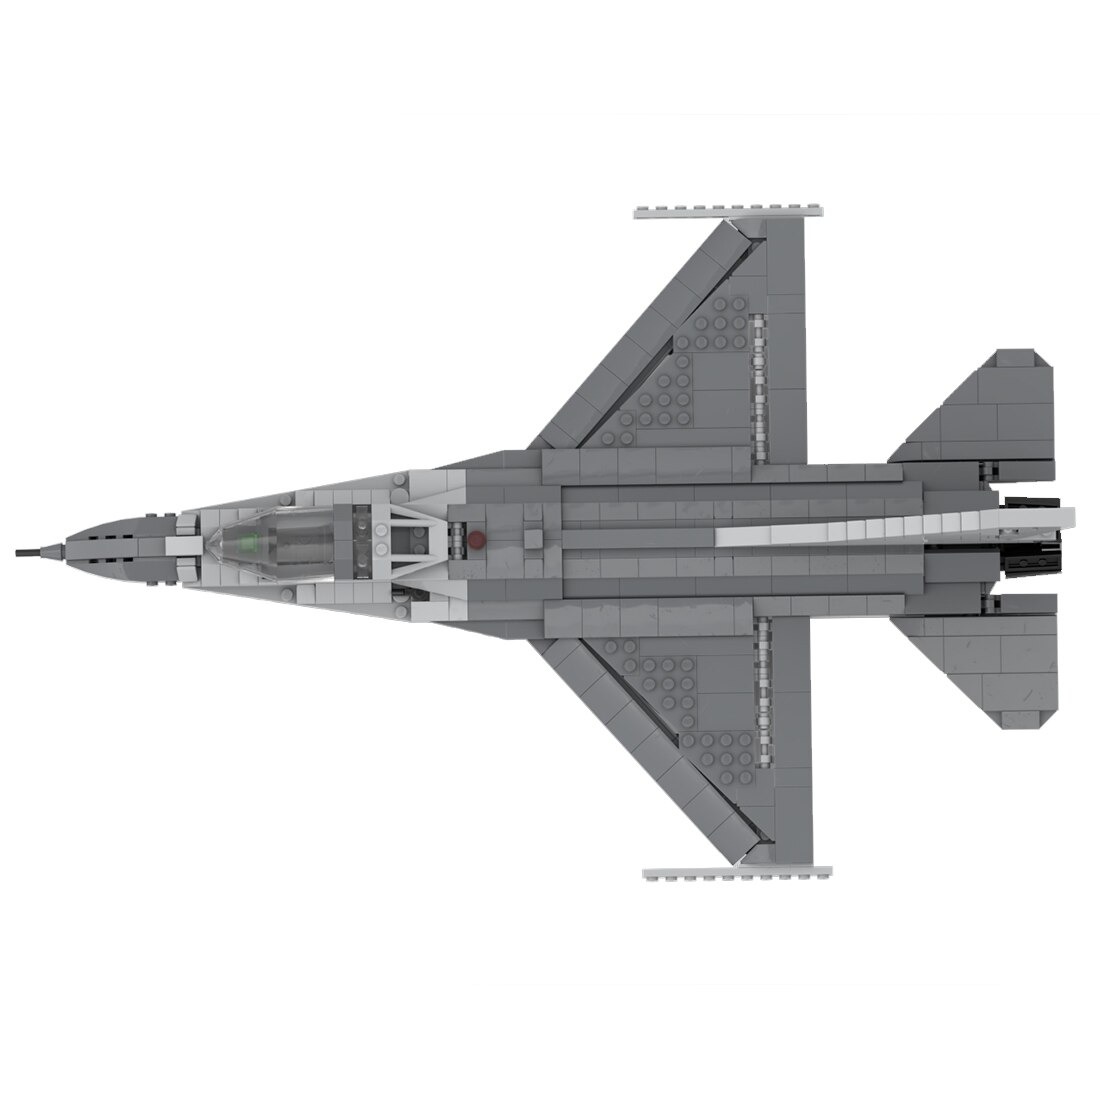 Authorized Moc 45041 F 16 Fighting Falco Main 4.jpg